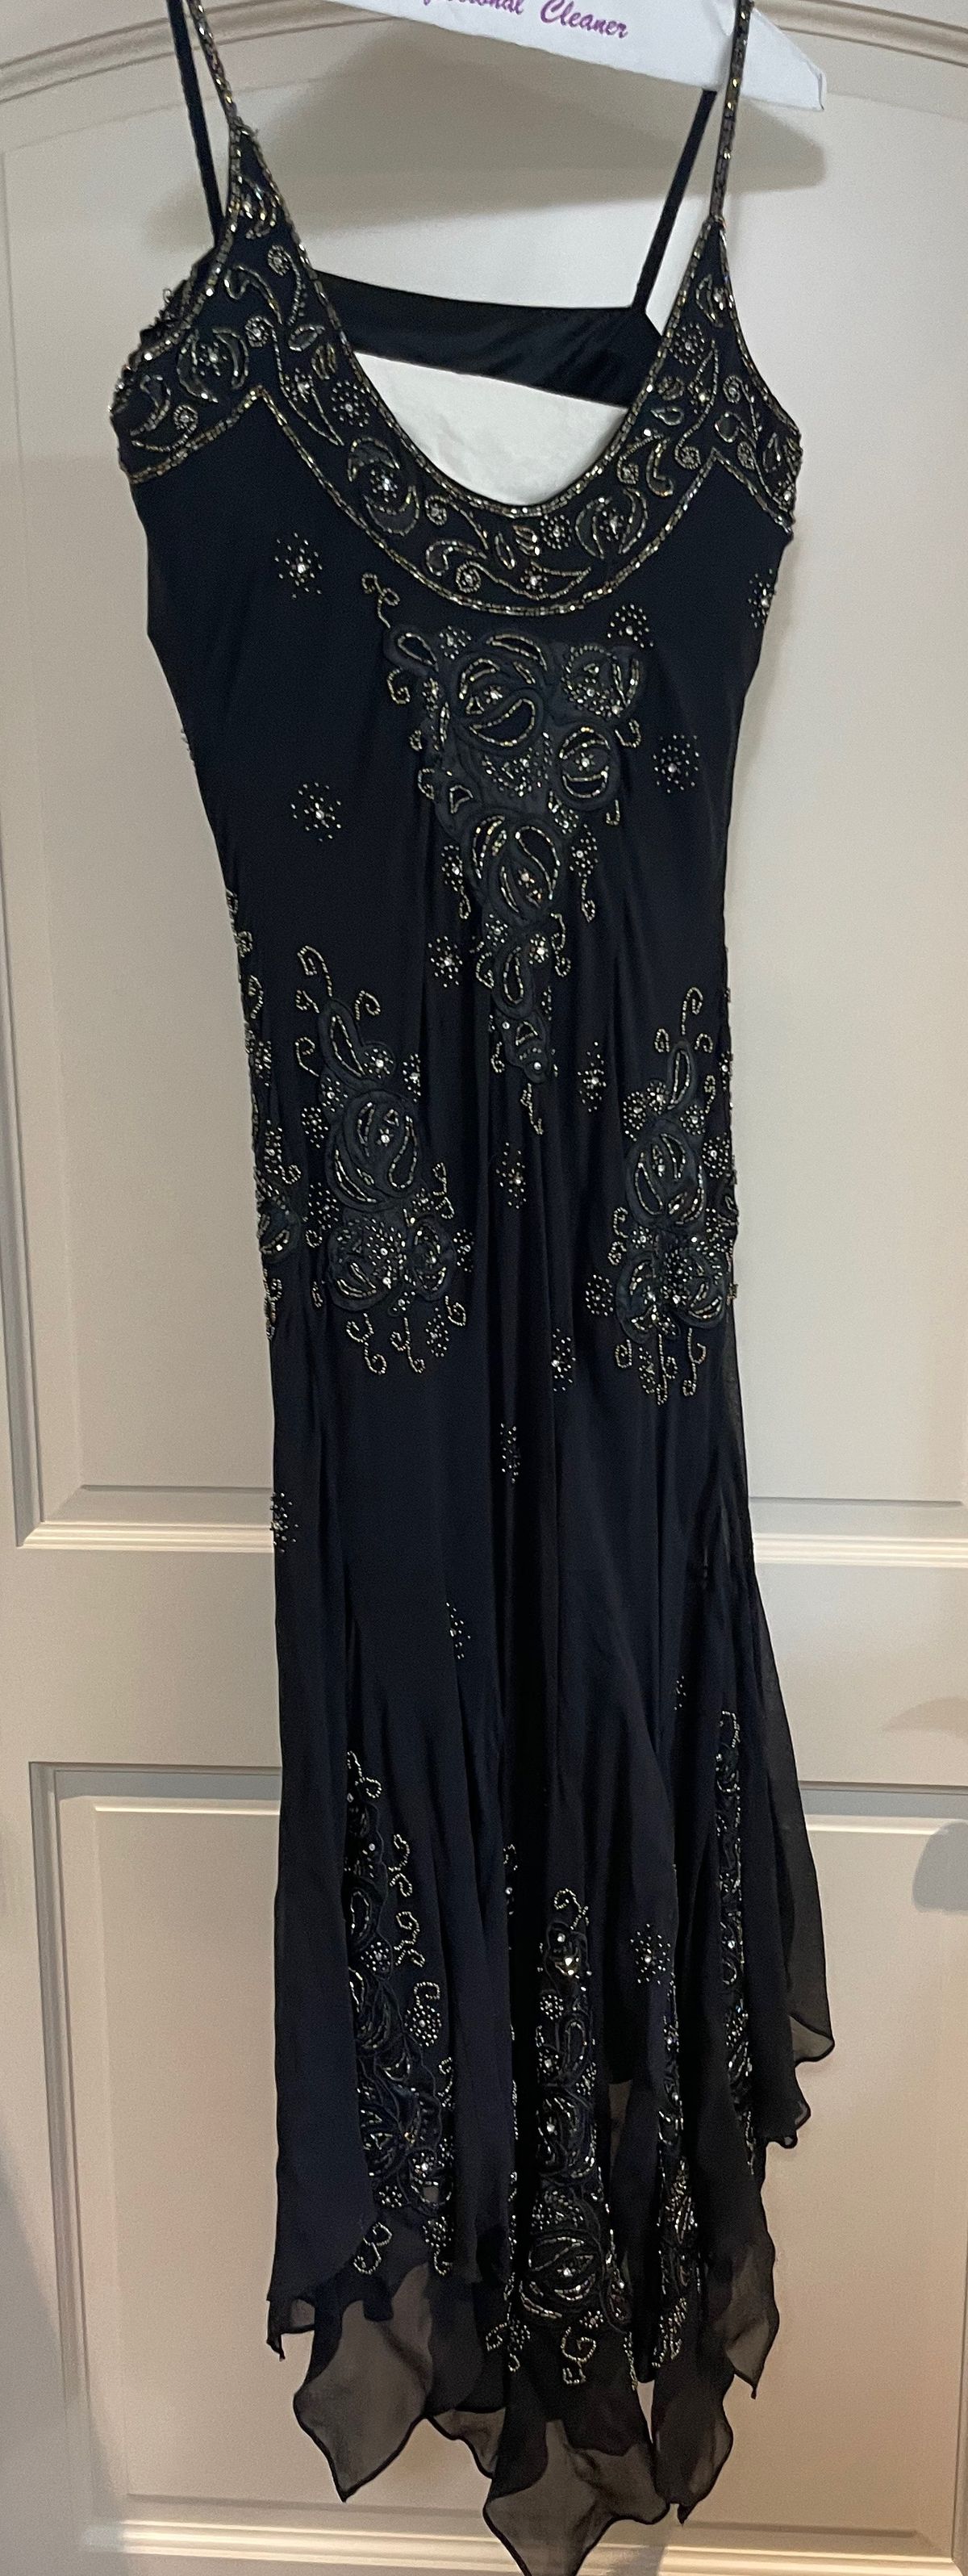 Lillie Rubin Size 4 Prom Satin Black Mermaid Dress on Queenly